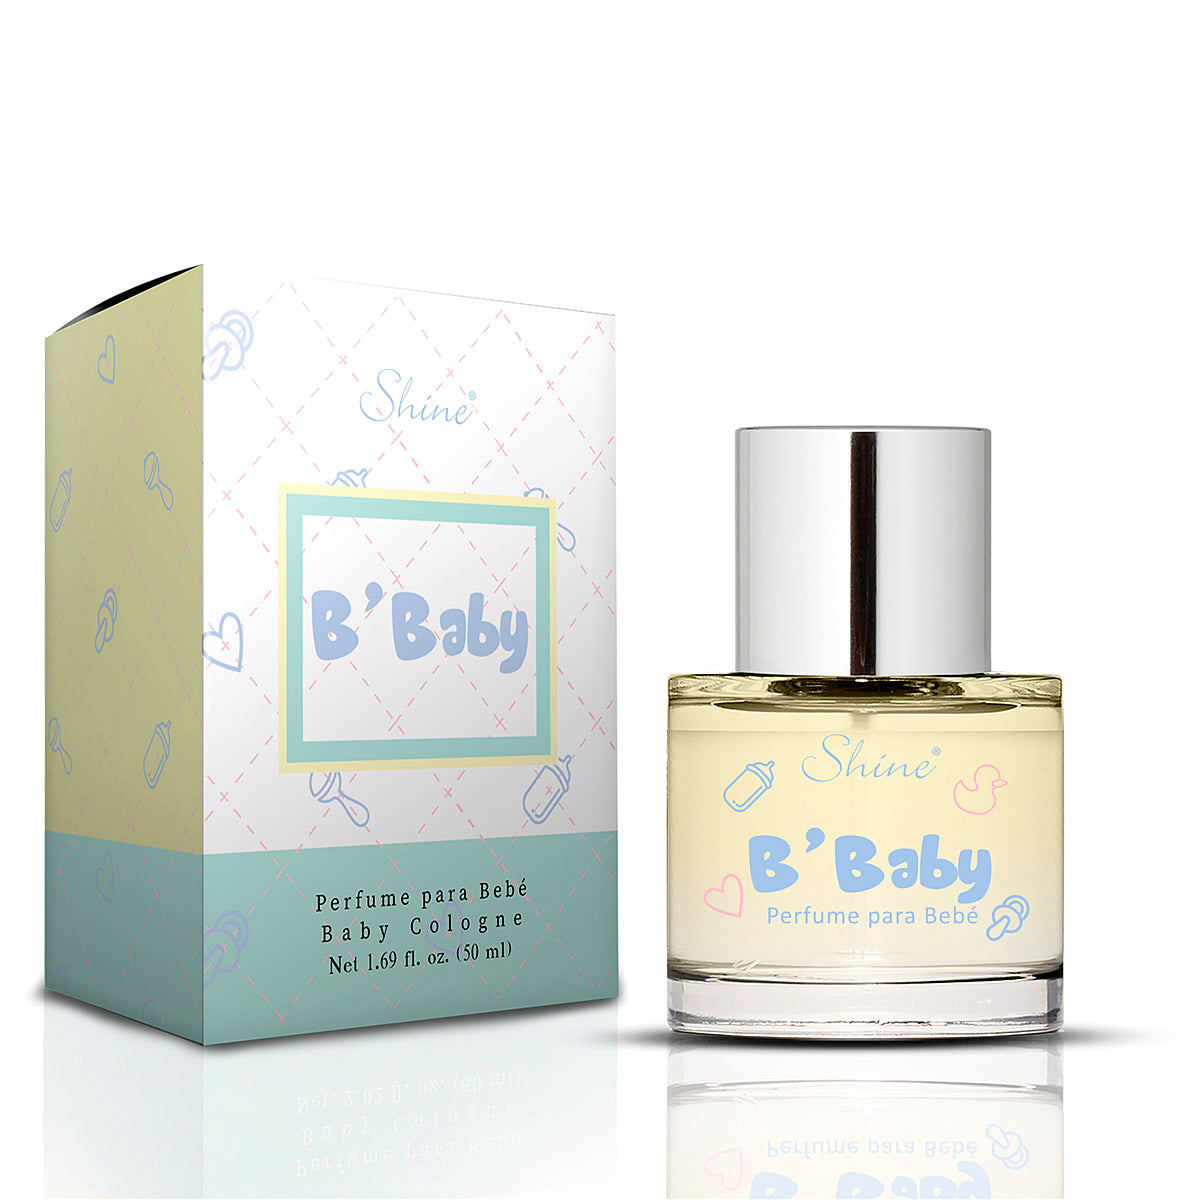 Pakar.com - Mayo: Regalos para mamá | Perfume para bebé cod-113403